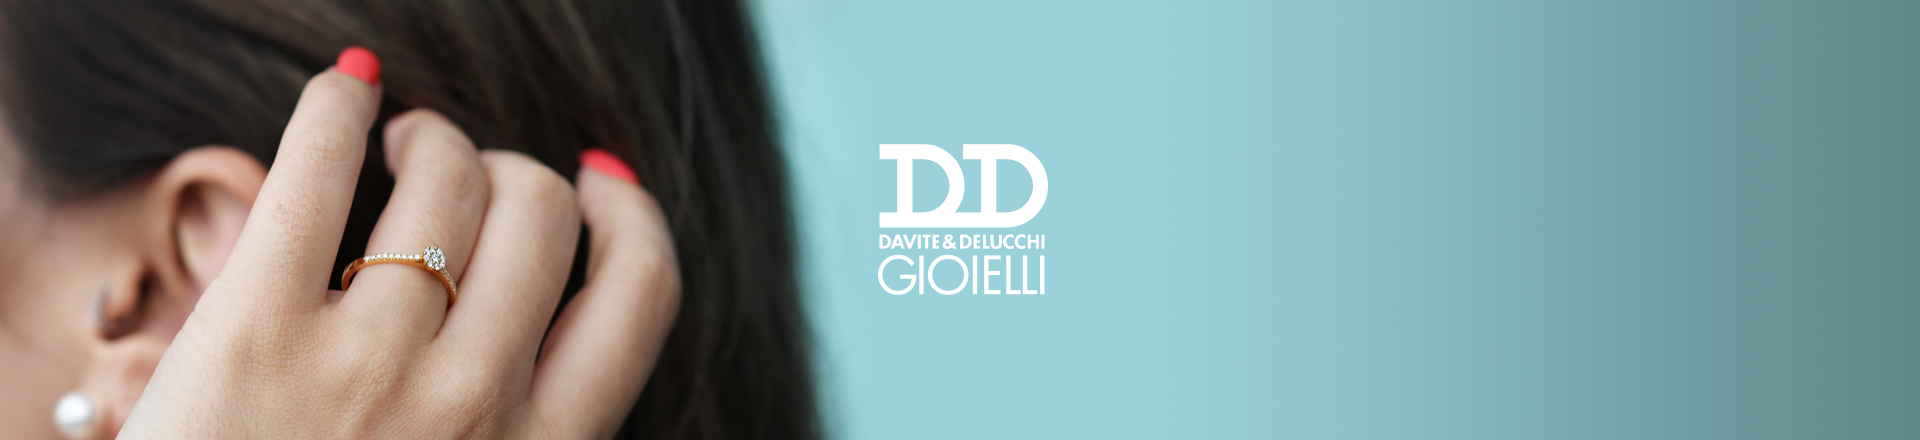 Davite Delucchi